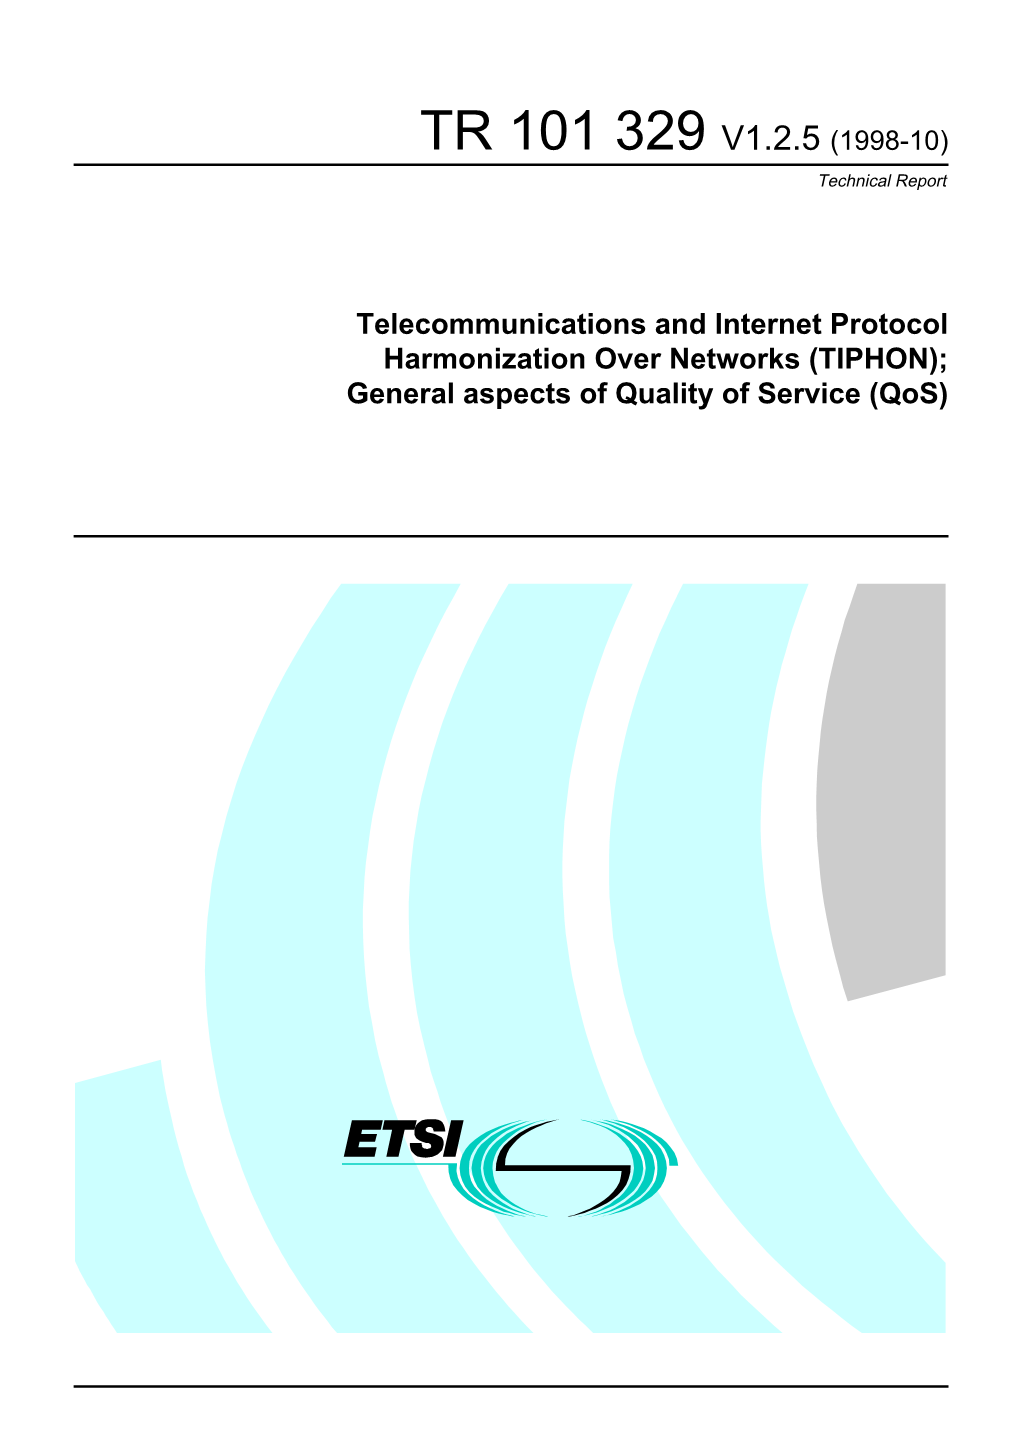 TR 101 329 V1.2.5 (1998-10) Technical Report